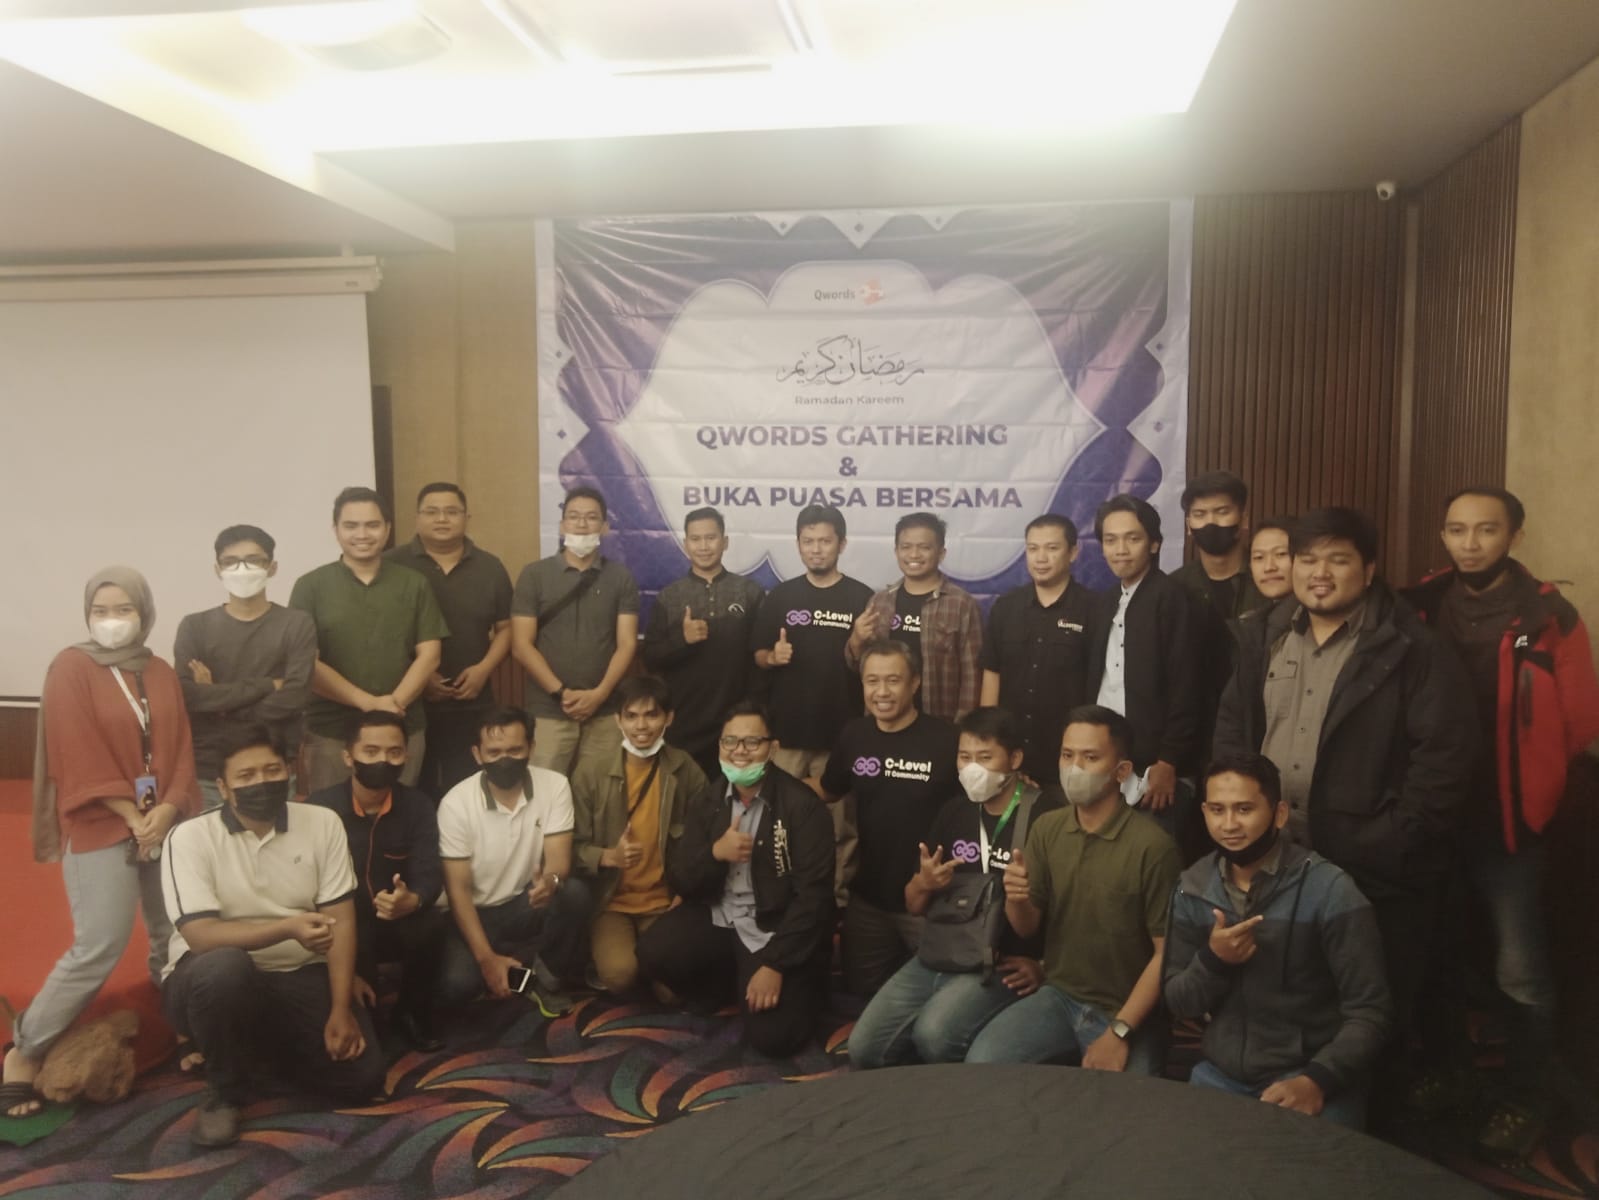 Gathering PT Qwords Company International sekaligus meluncurkan produk baru bernama Qwords Cloud Connectivity di Vio Hotel Pasteur Bandung, Rabu (20/4).